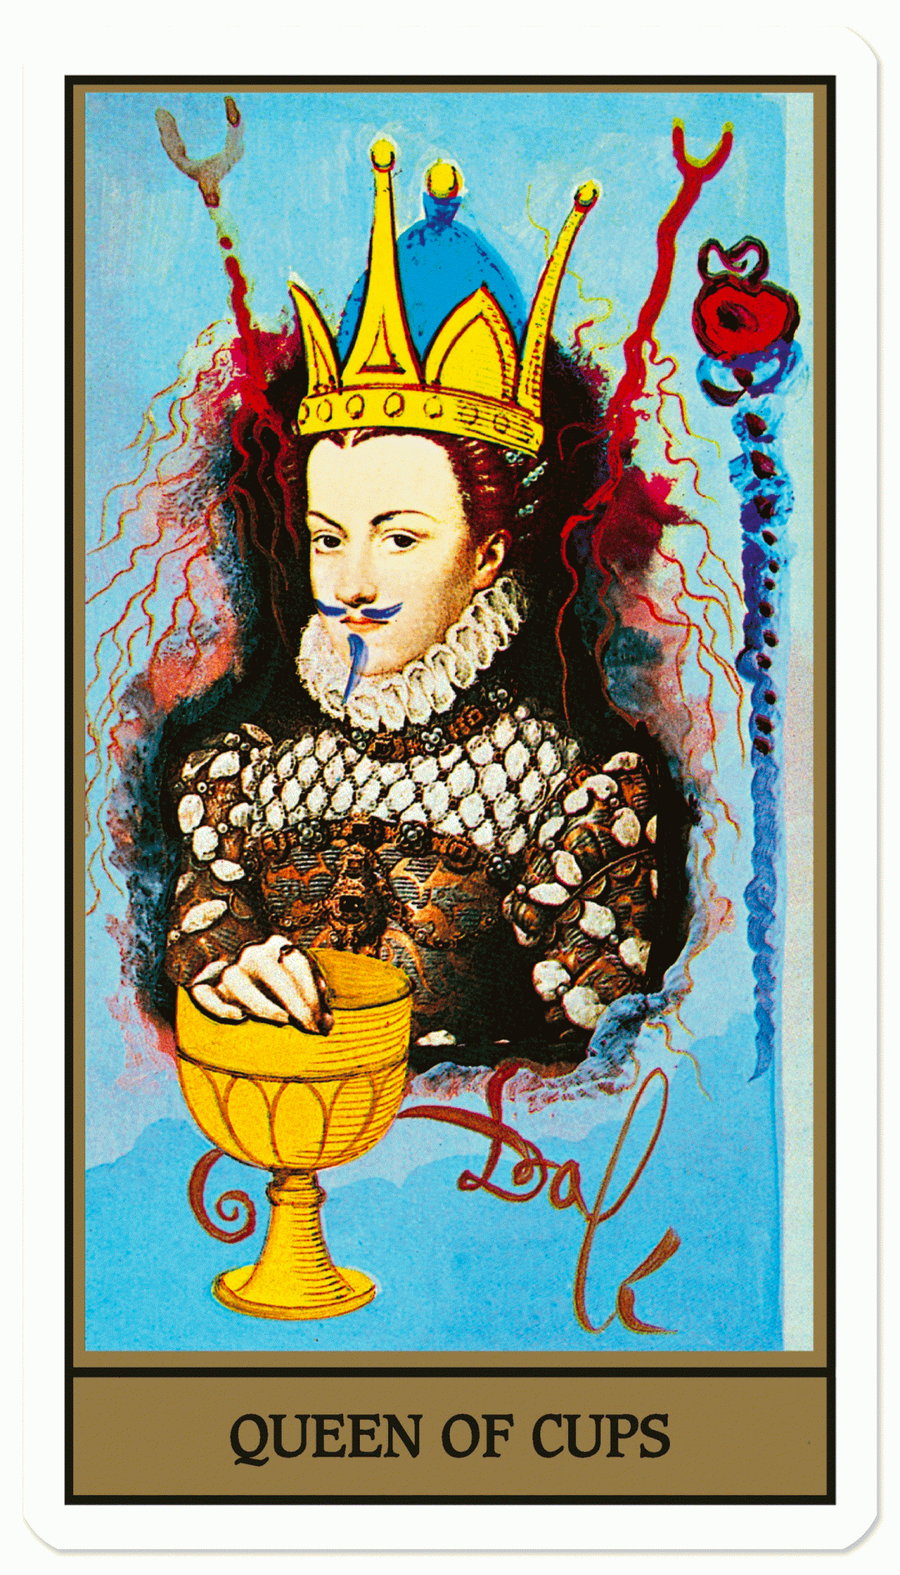 A card from artist Salvador Dalí's Limited Edition Tarot Deck 